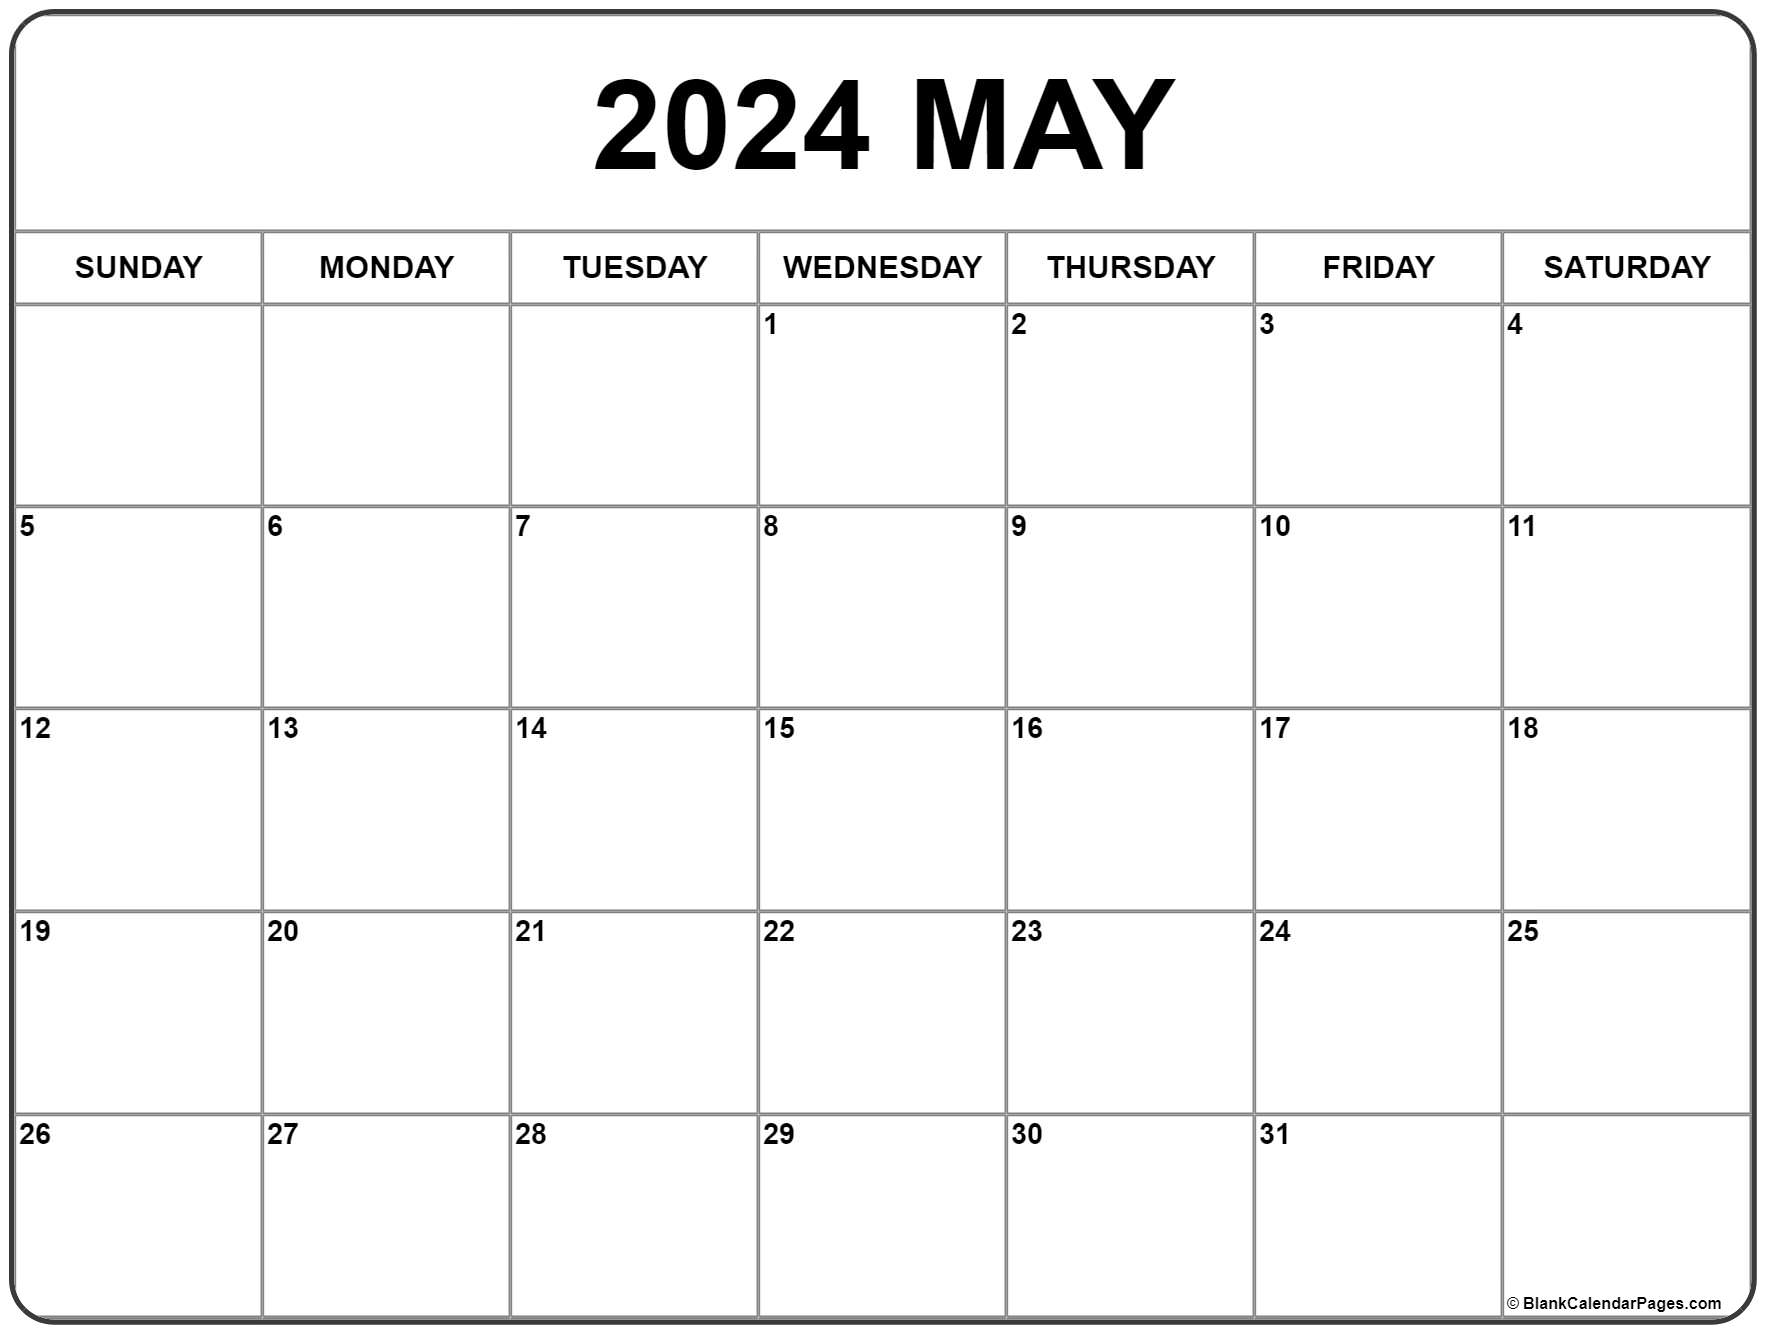 Memorial Day 2021 Calendar May 2021 calendar | free printable monthly calendars